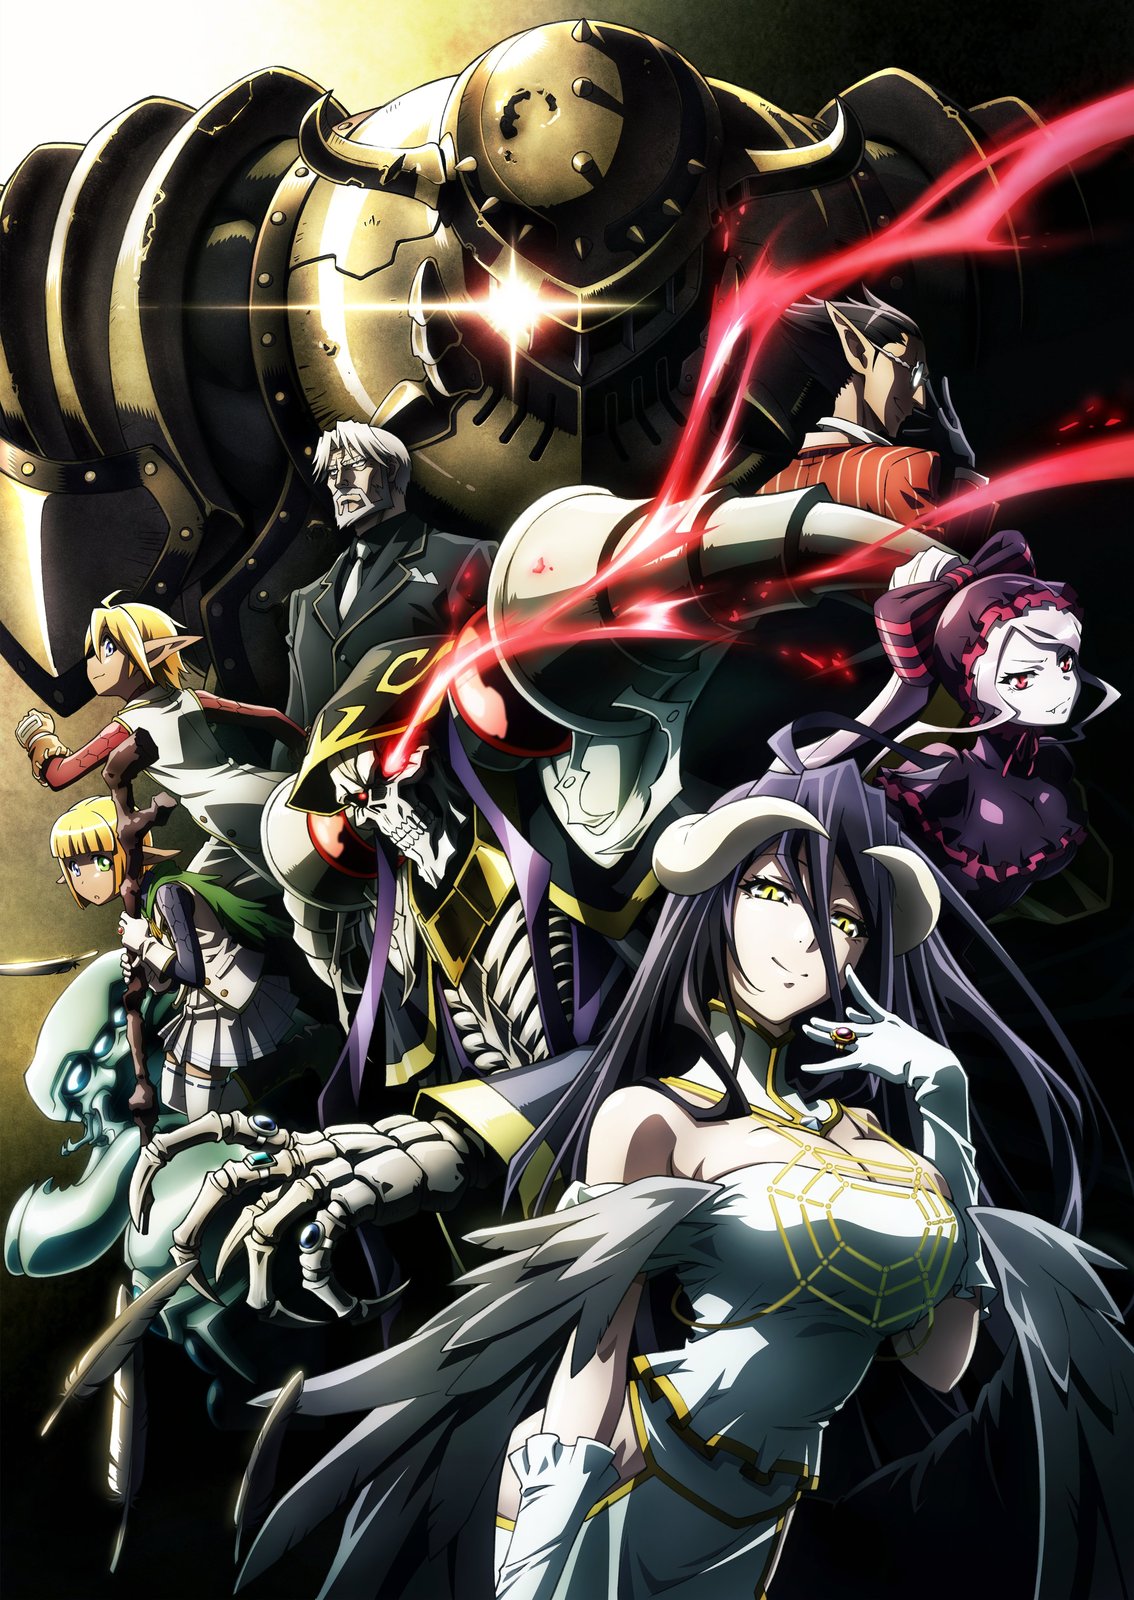 Overlord IV Poster Anime TV Series Season 4 Art Print Size 11x17 24x36 27x40